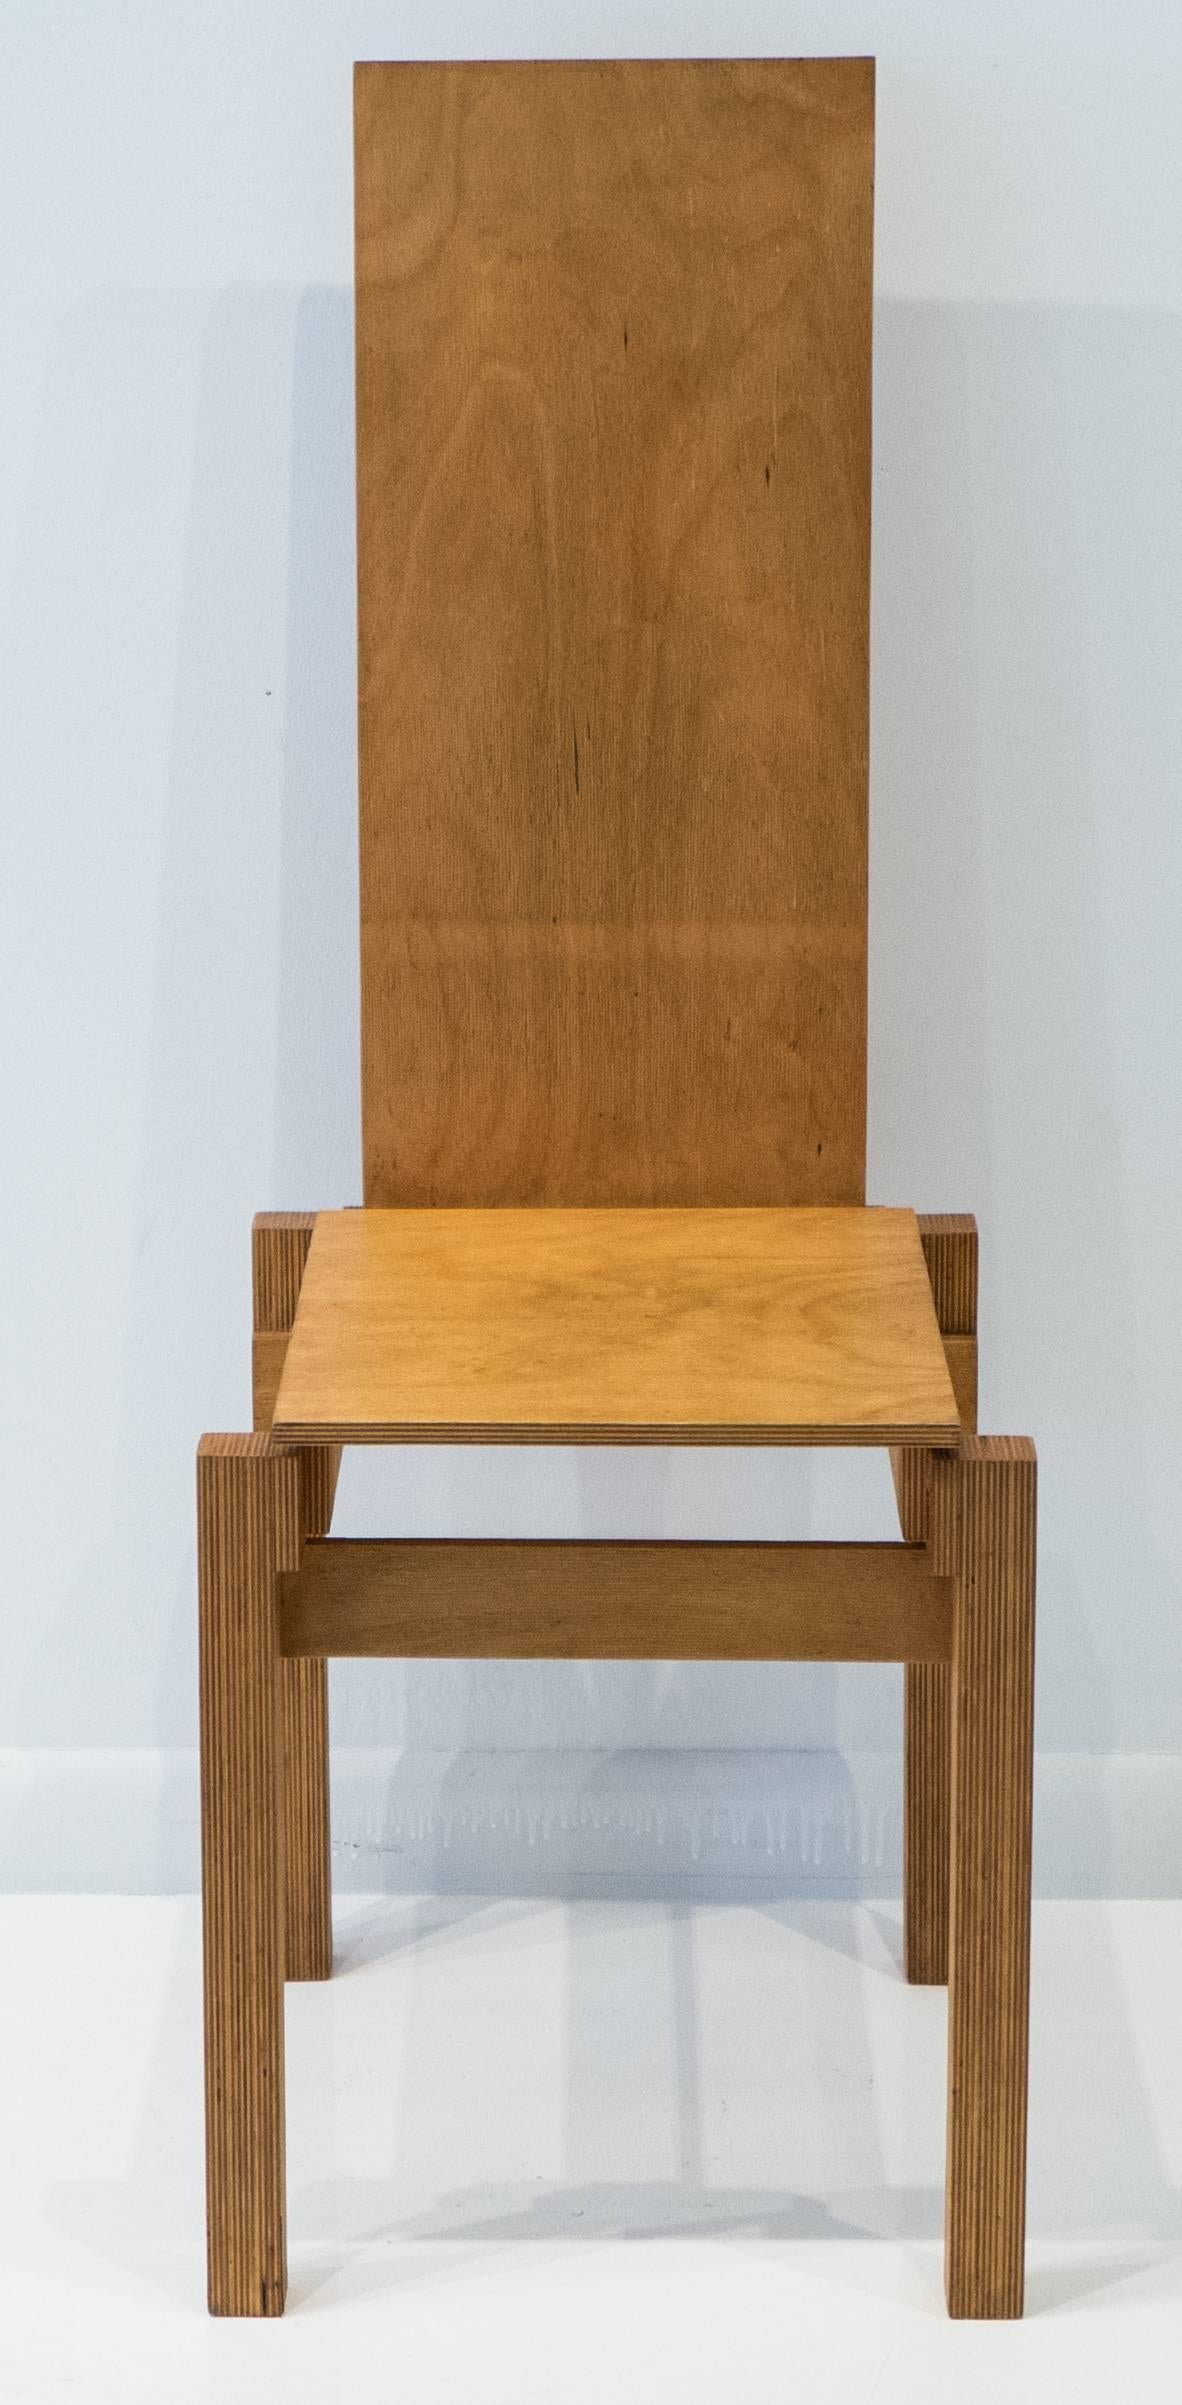 American Craftsman Constructivist Chair in Birch Plywood